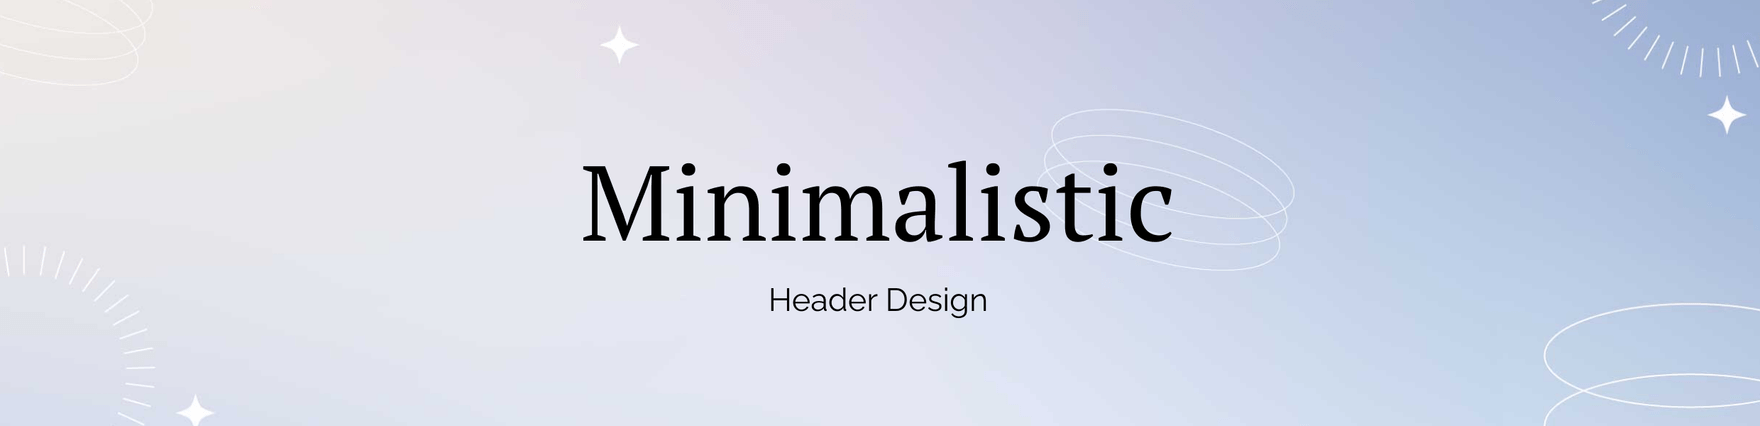 Minimalistic Header Design